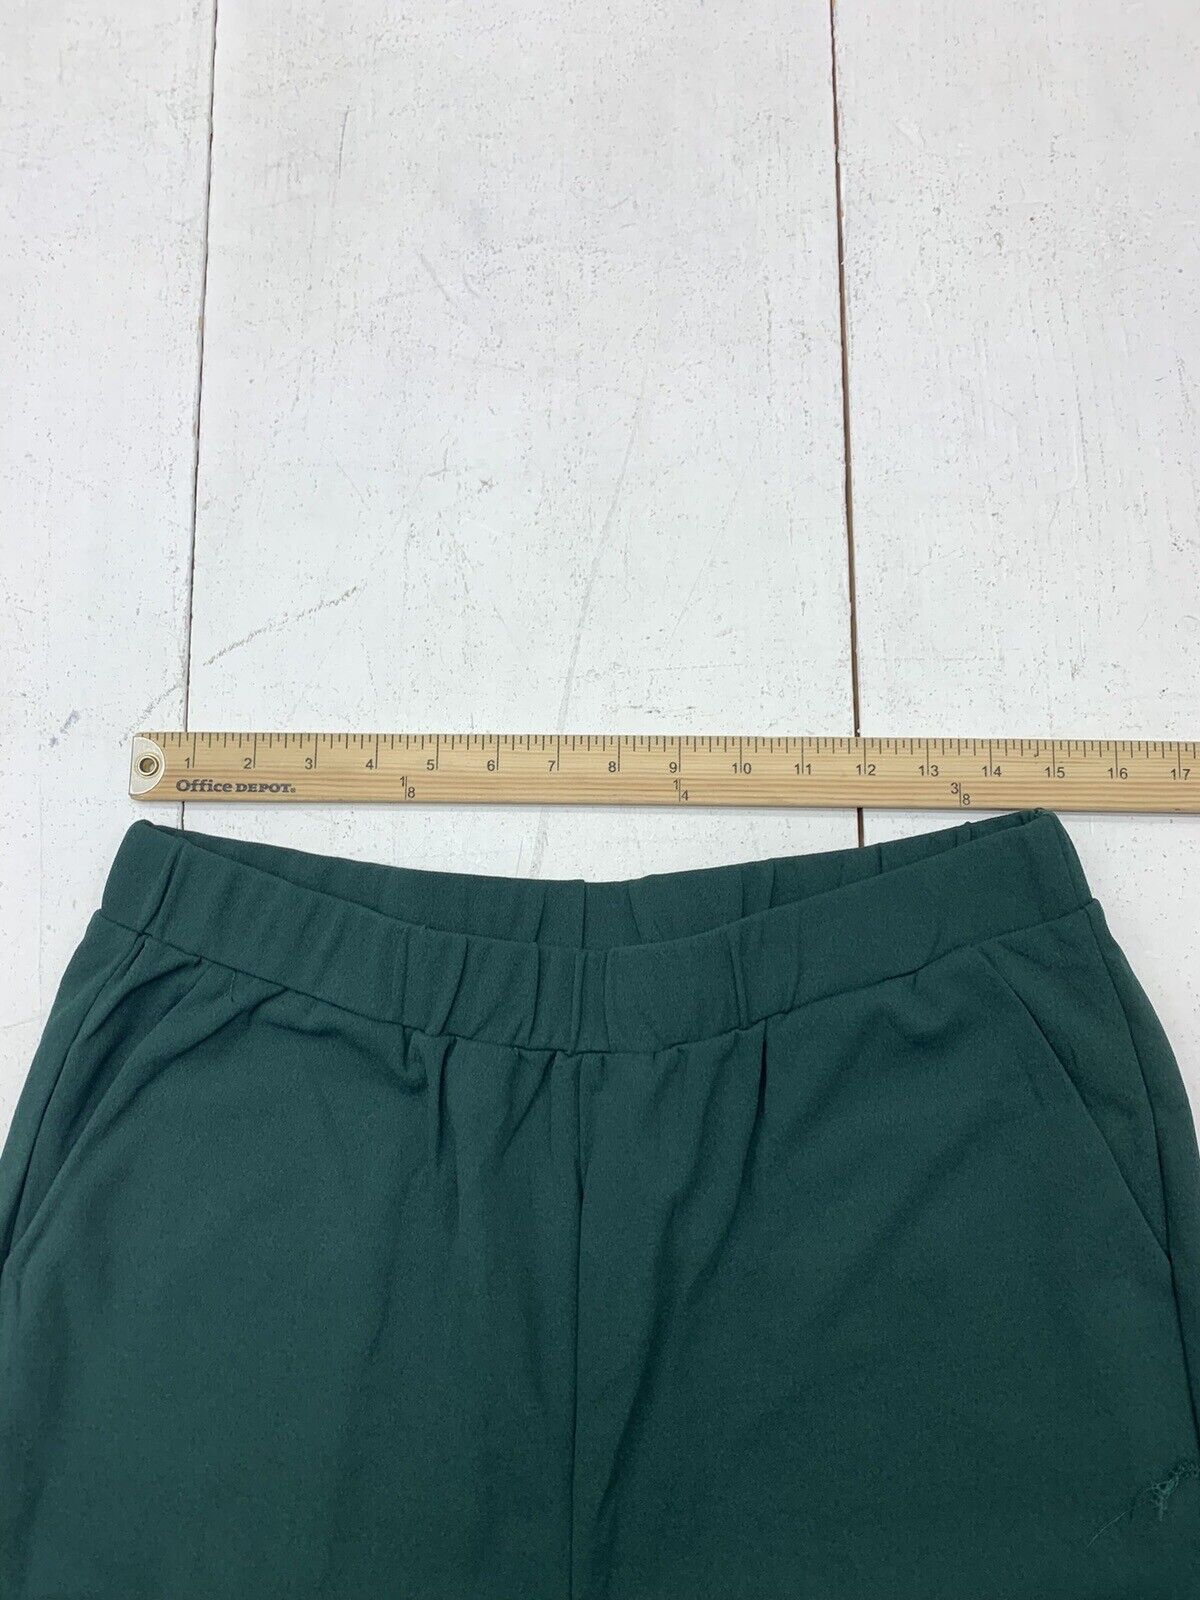 Shein Womens Green Elastic Waist Pants Size 1XL - beyond exchange